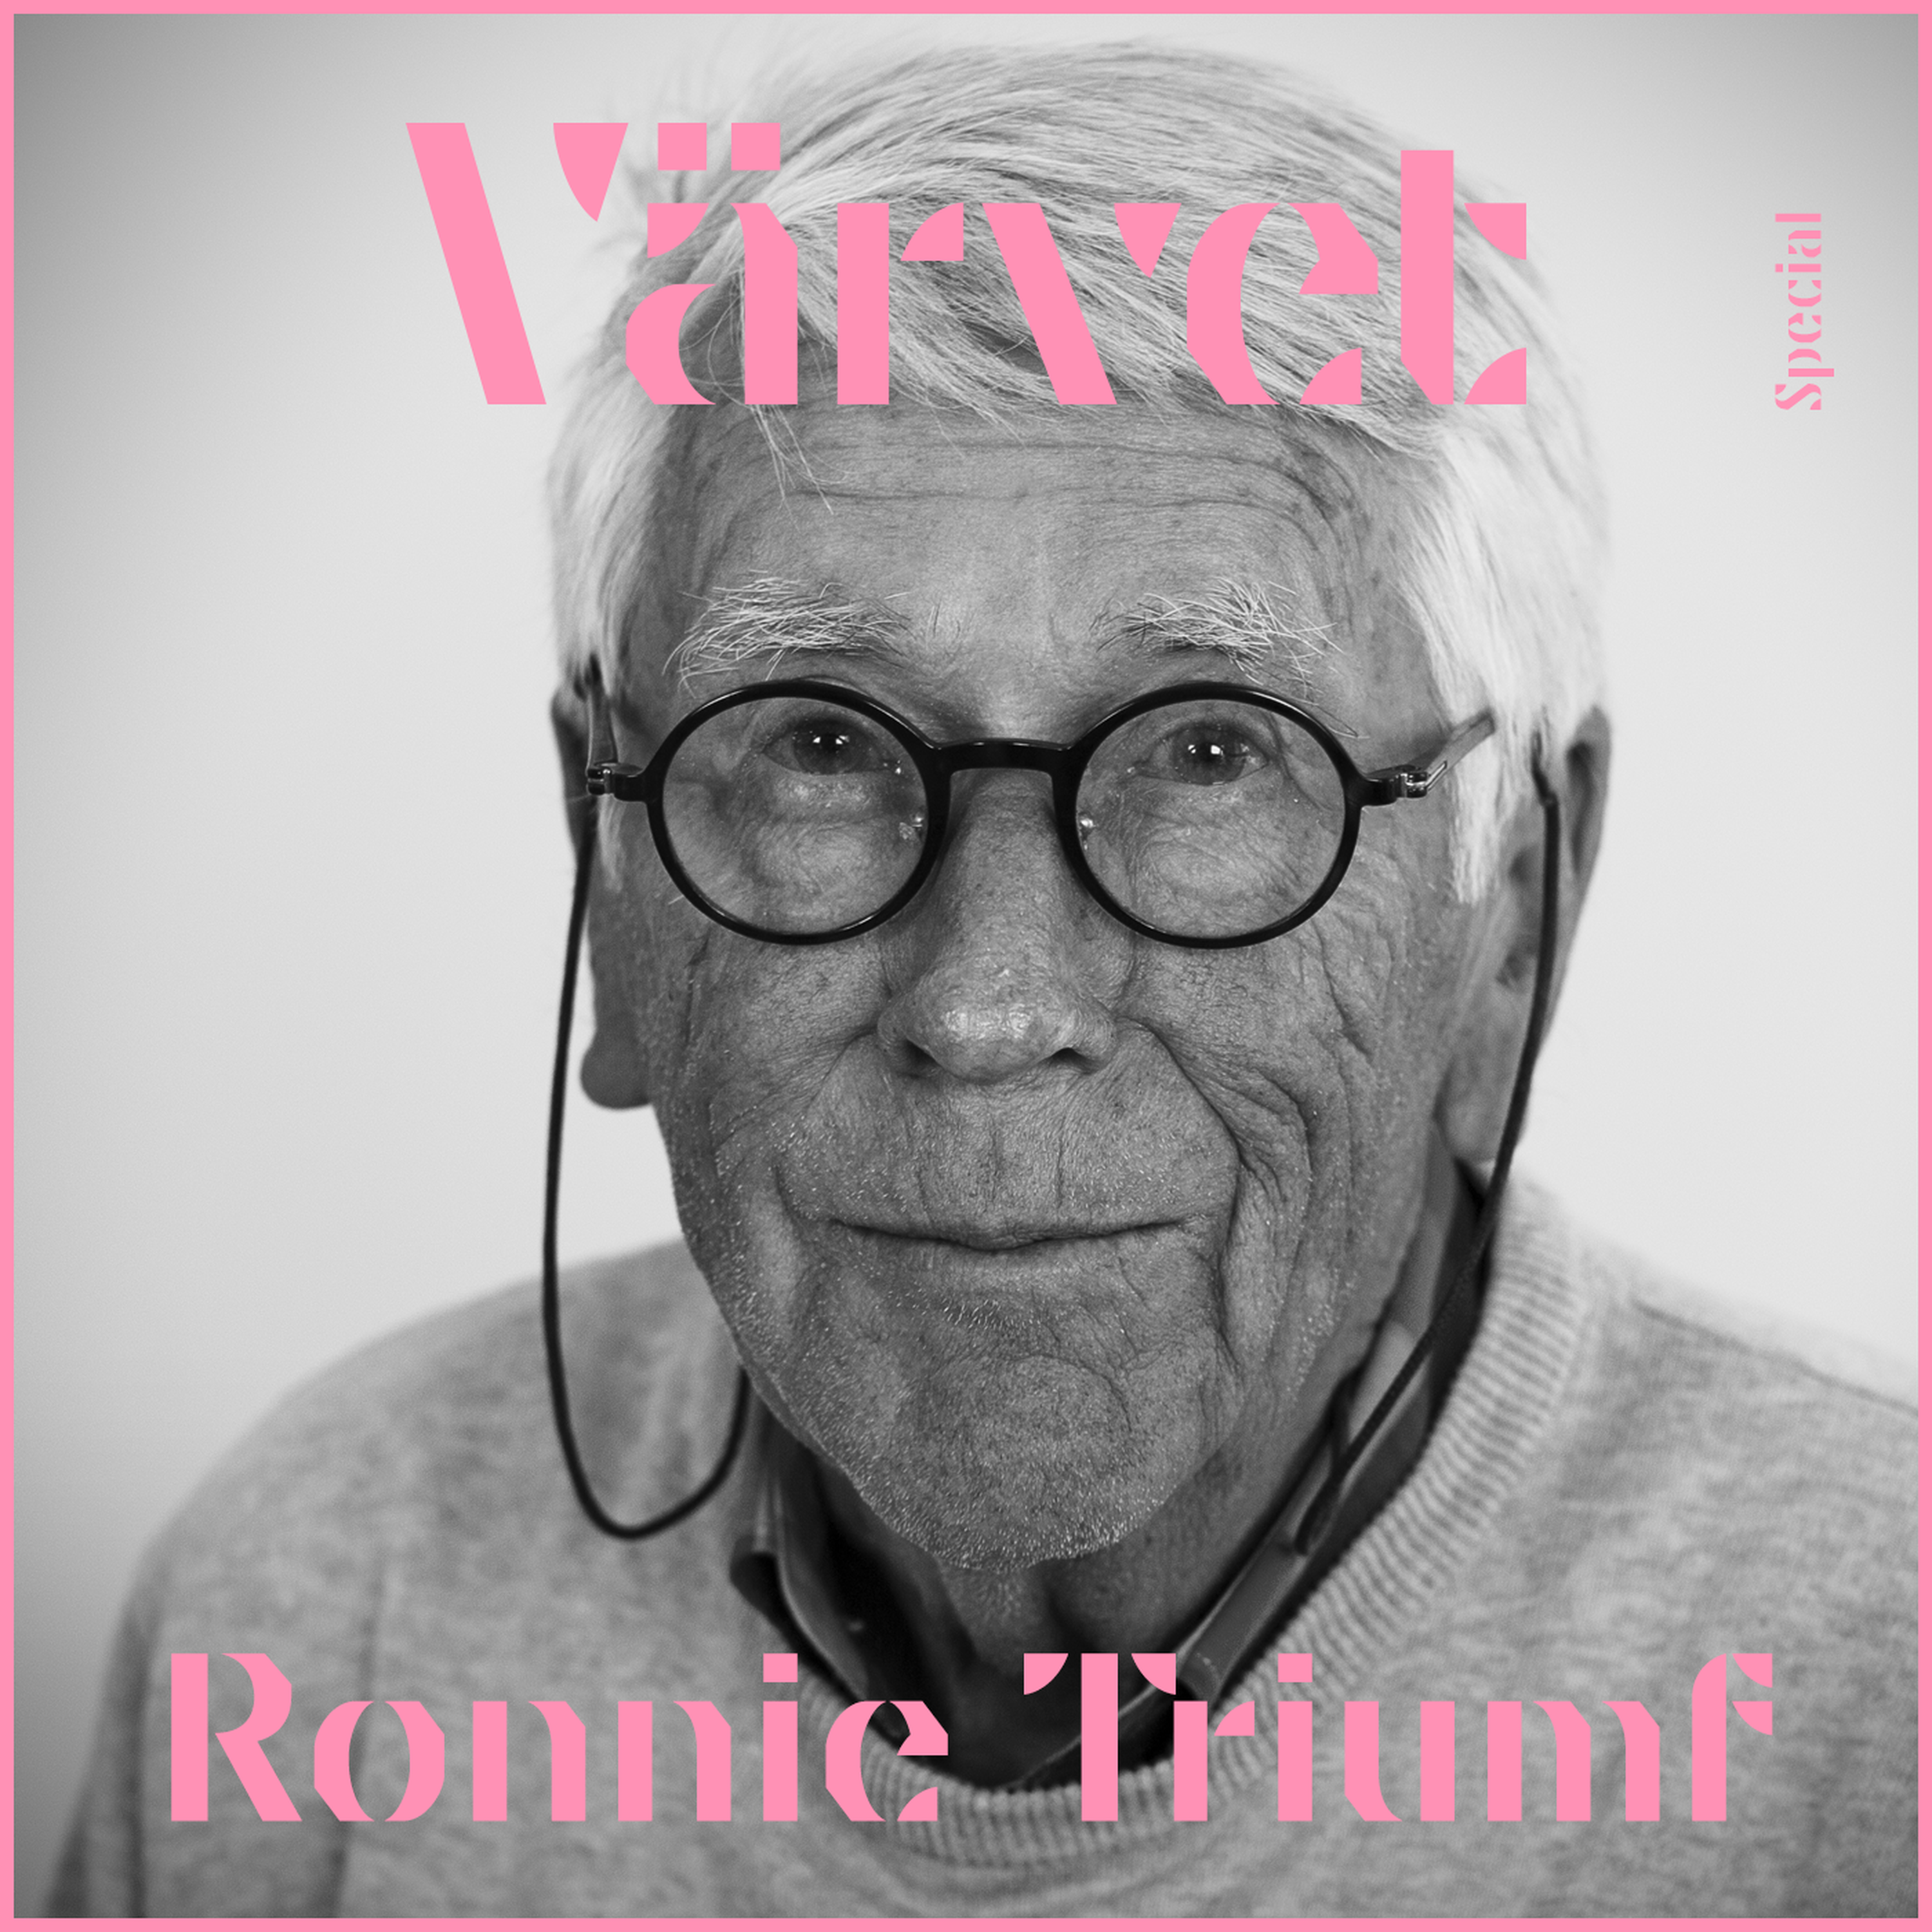 SPECIAL: Ronnie Triumf